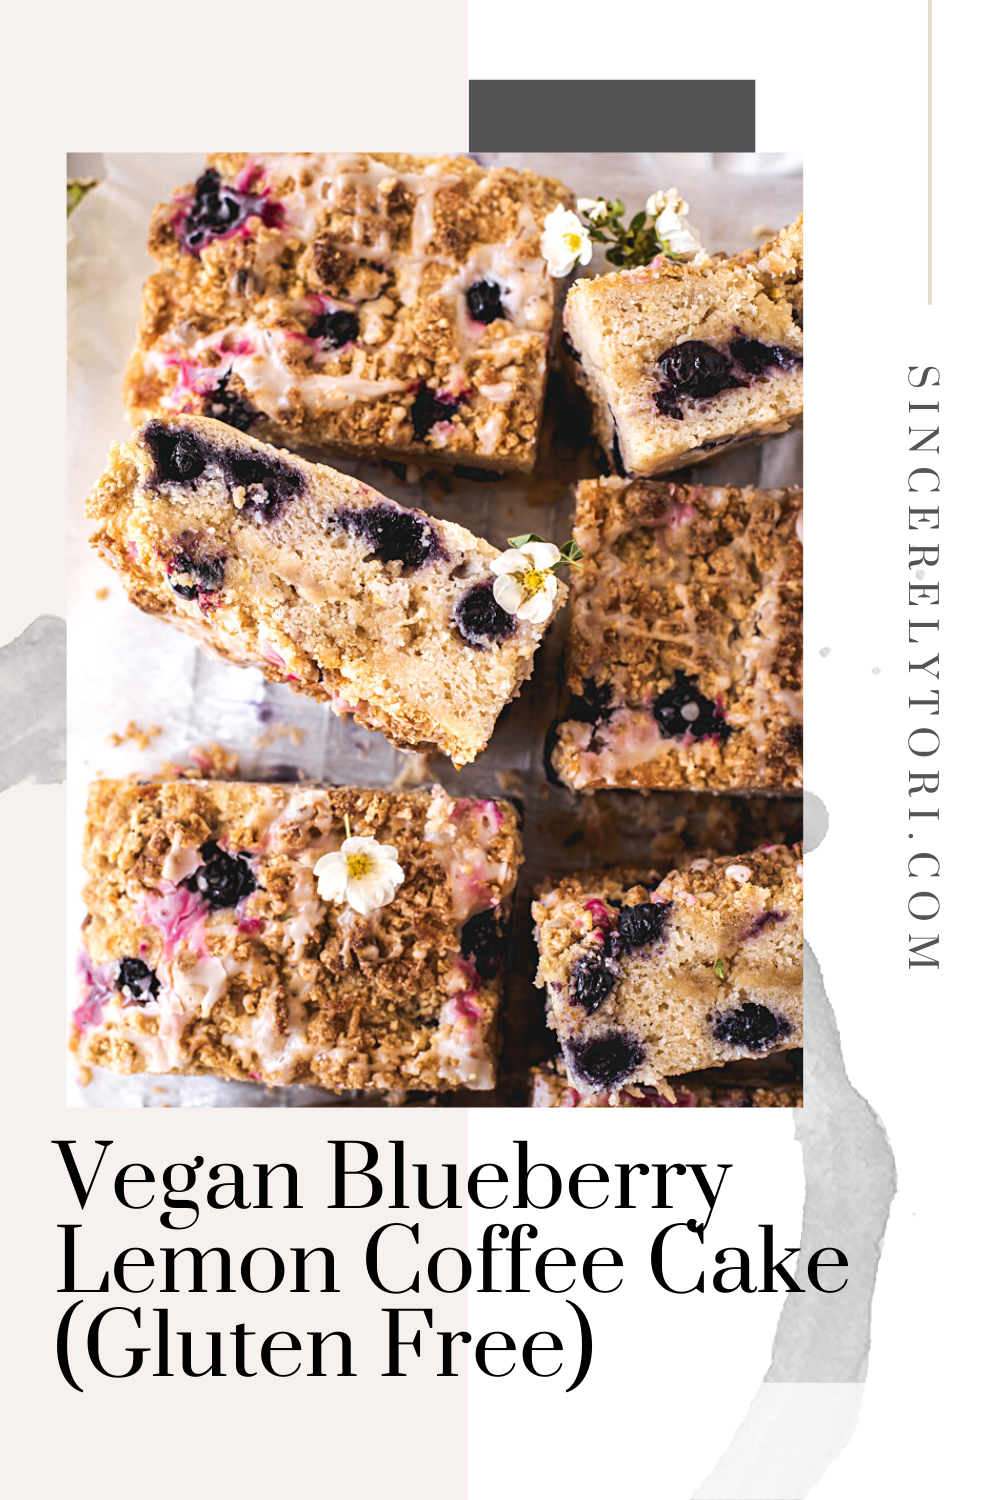 Vegan Blueberry Lemon Coffee Cake (Gluten Free)